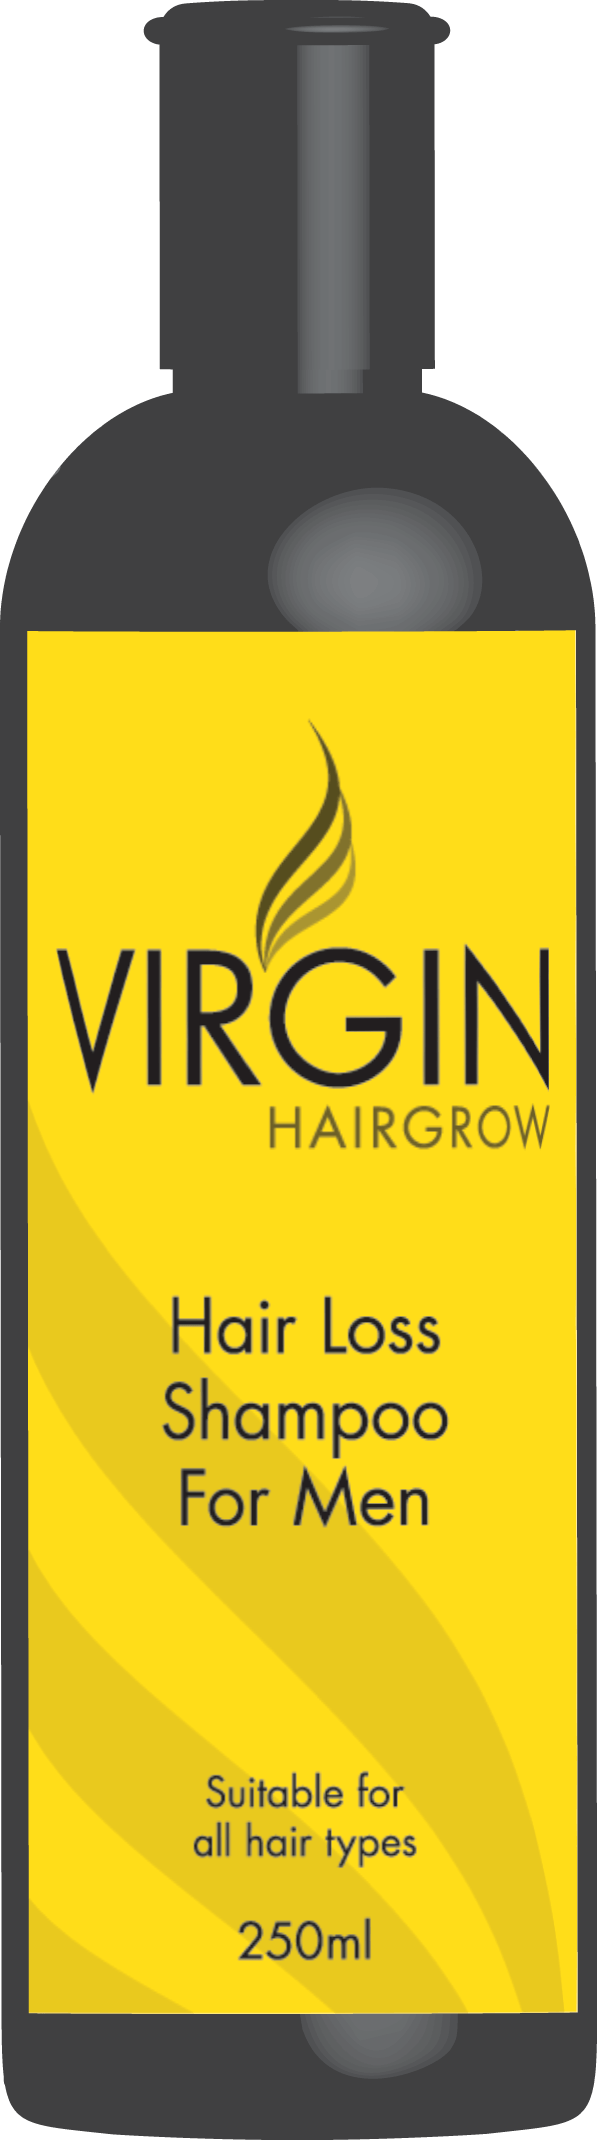 Shampoo with Back Logo - VIRGIN HAIR REGAIN SHAMPOO THICK HEALTHY HAIR IN 30 DAYS!!